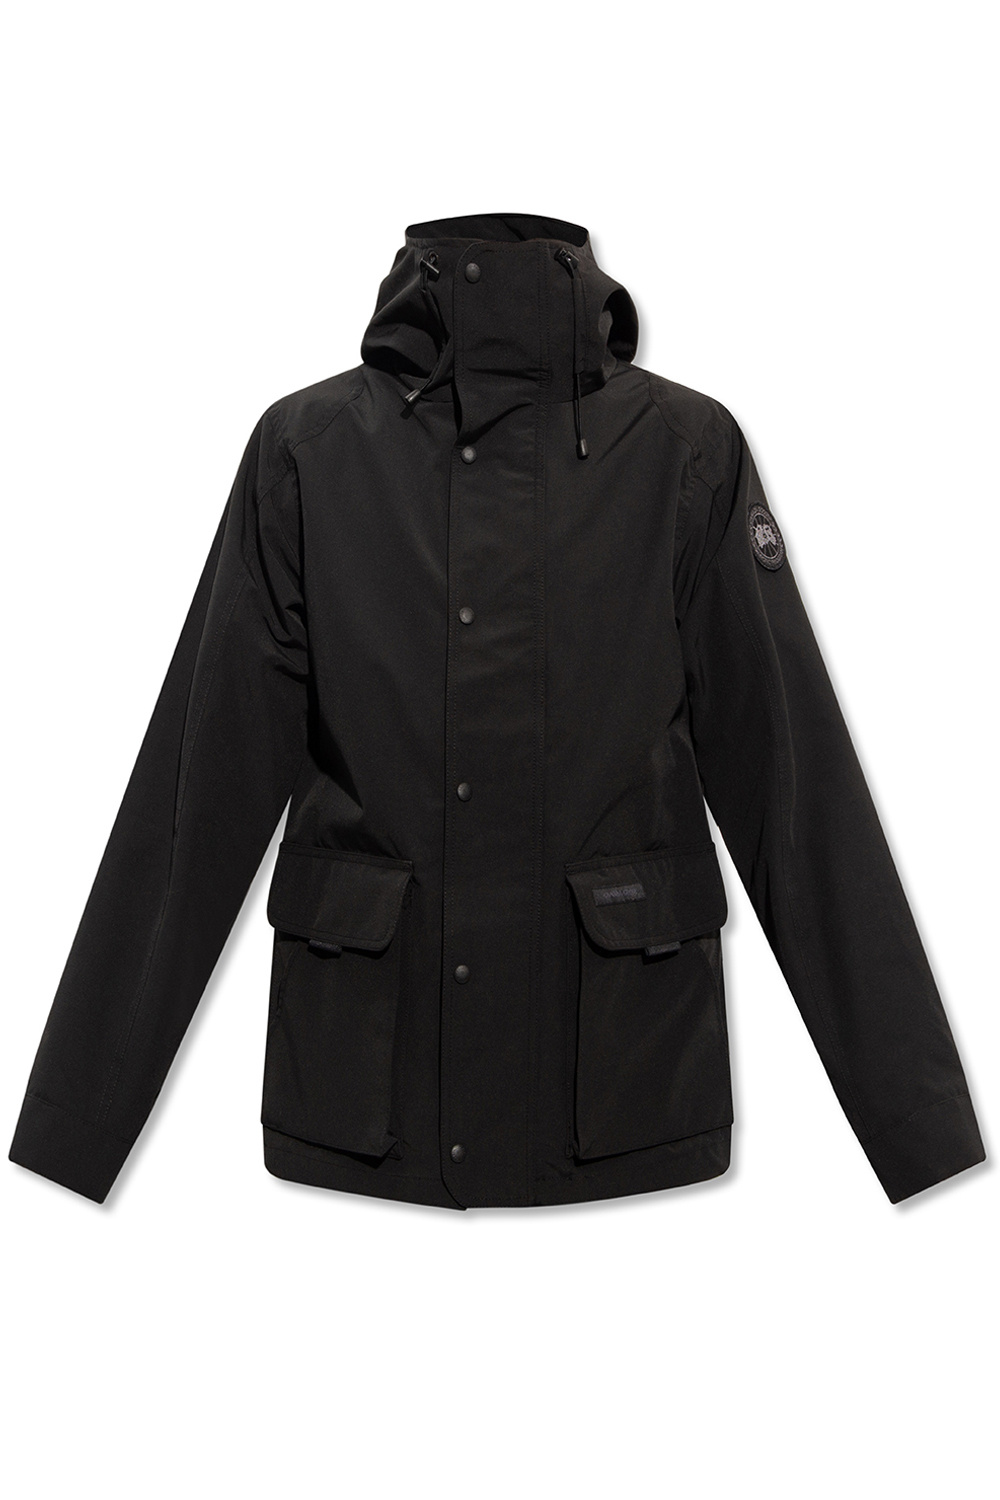 Canada Goose ‘Lockeport’ jacket